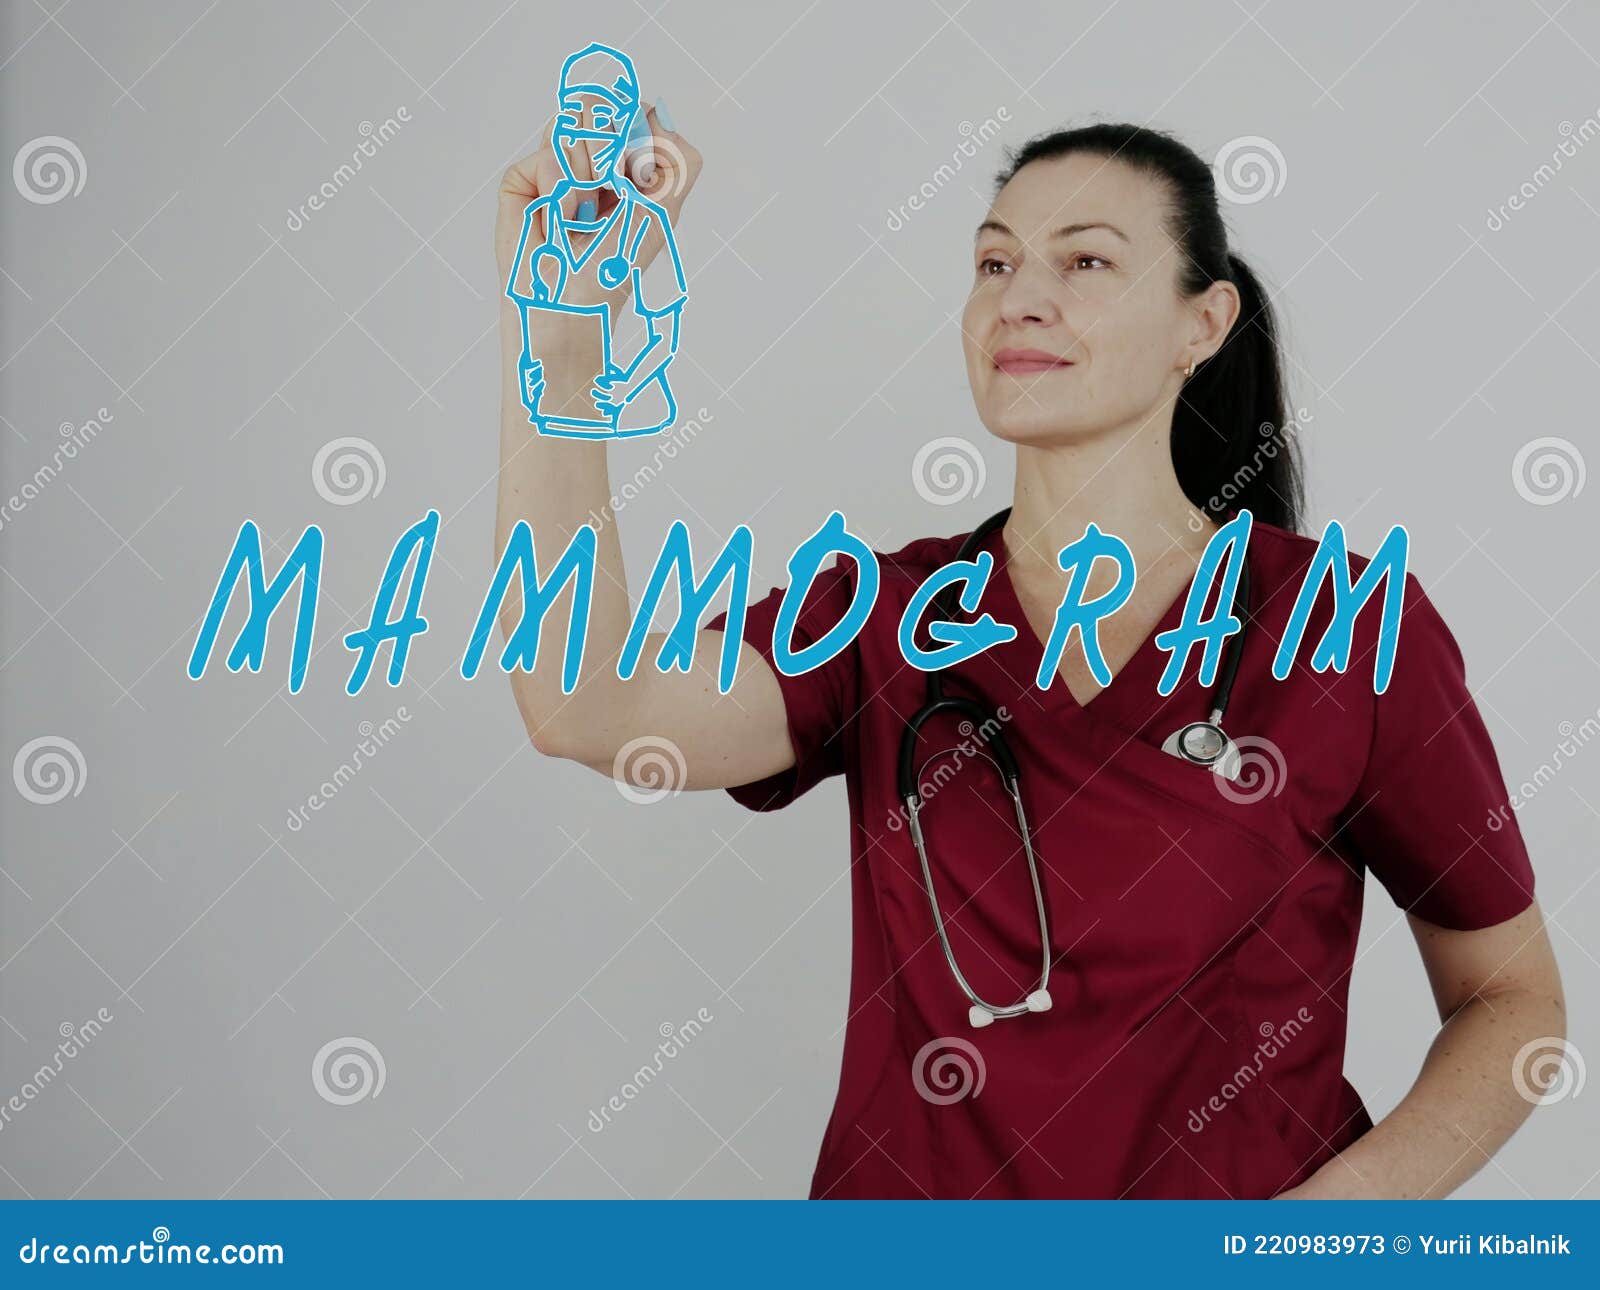 medico writing mammogram on screen by a blue pen